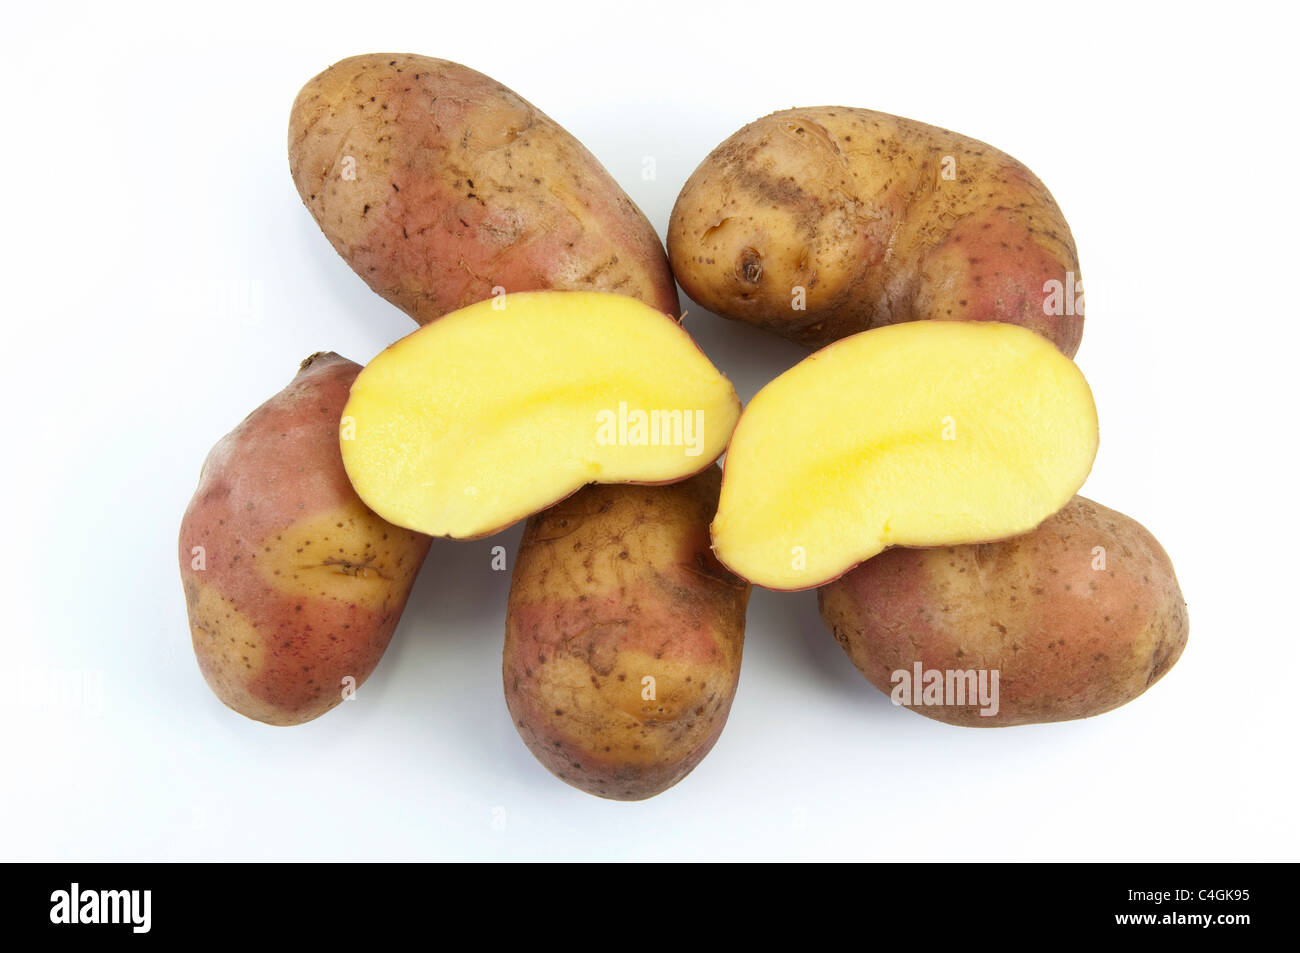 Andean Potato, Mayan Twilight Potatoe (Solanum phureja Mayan Gold). Tubers, studio picture against a white background. Stock Photo